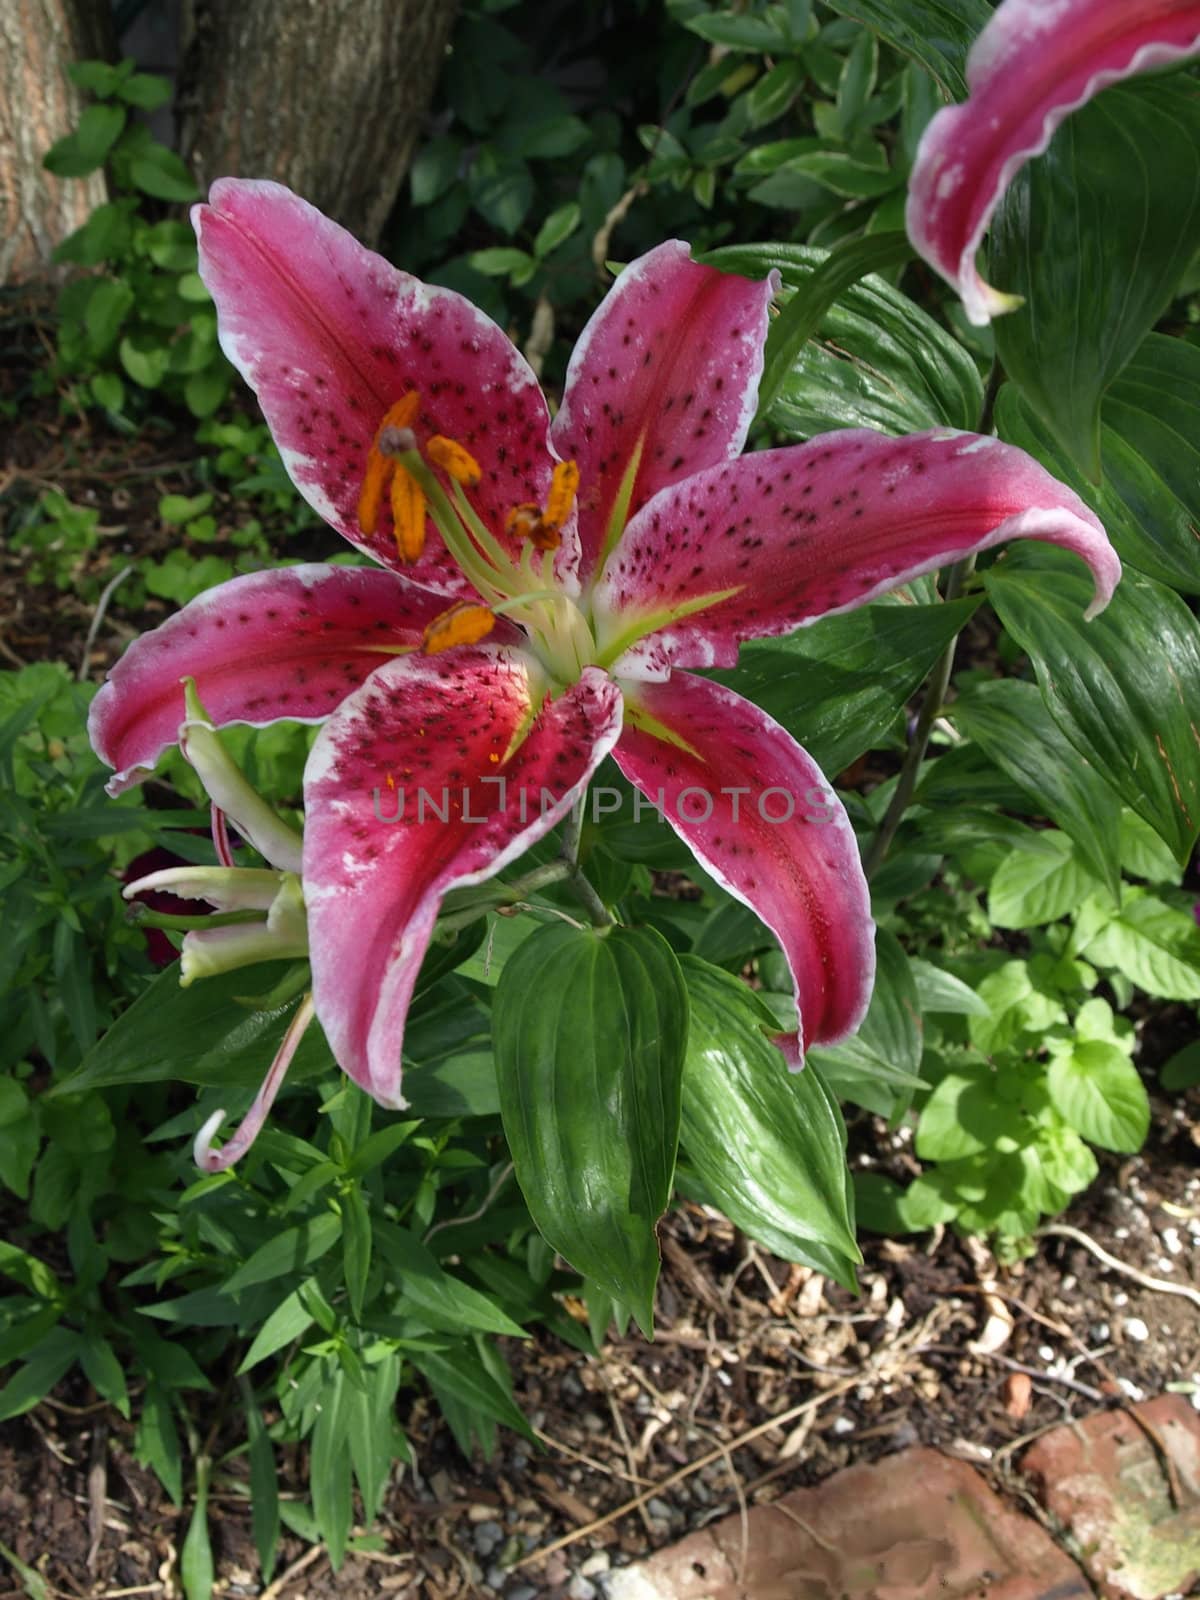 A beautiful Stargazer Lily in full bloom growing in a garden.